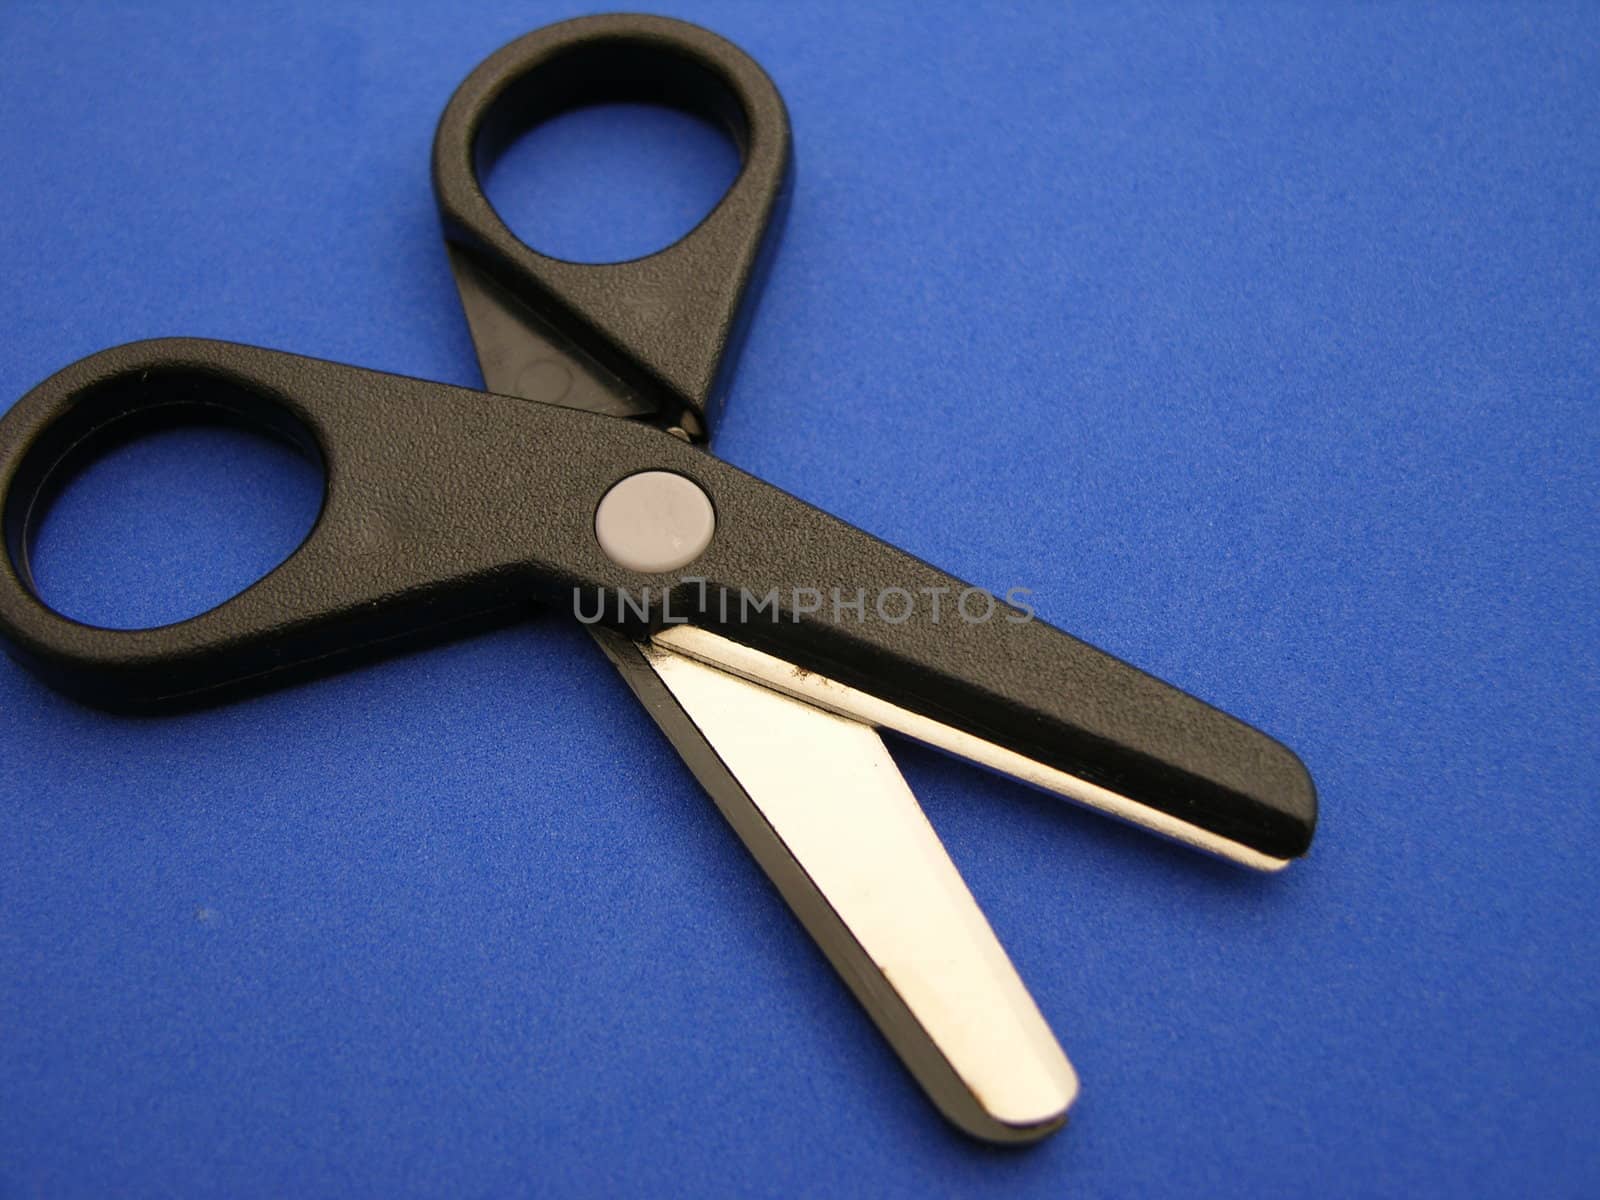 Scissors by northwoodsphoto